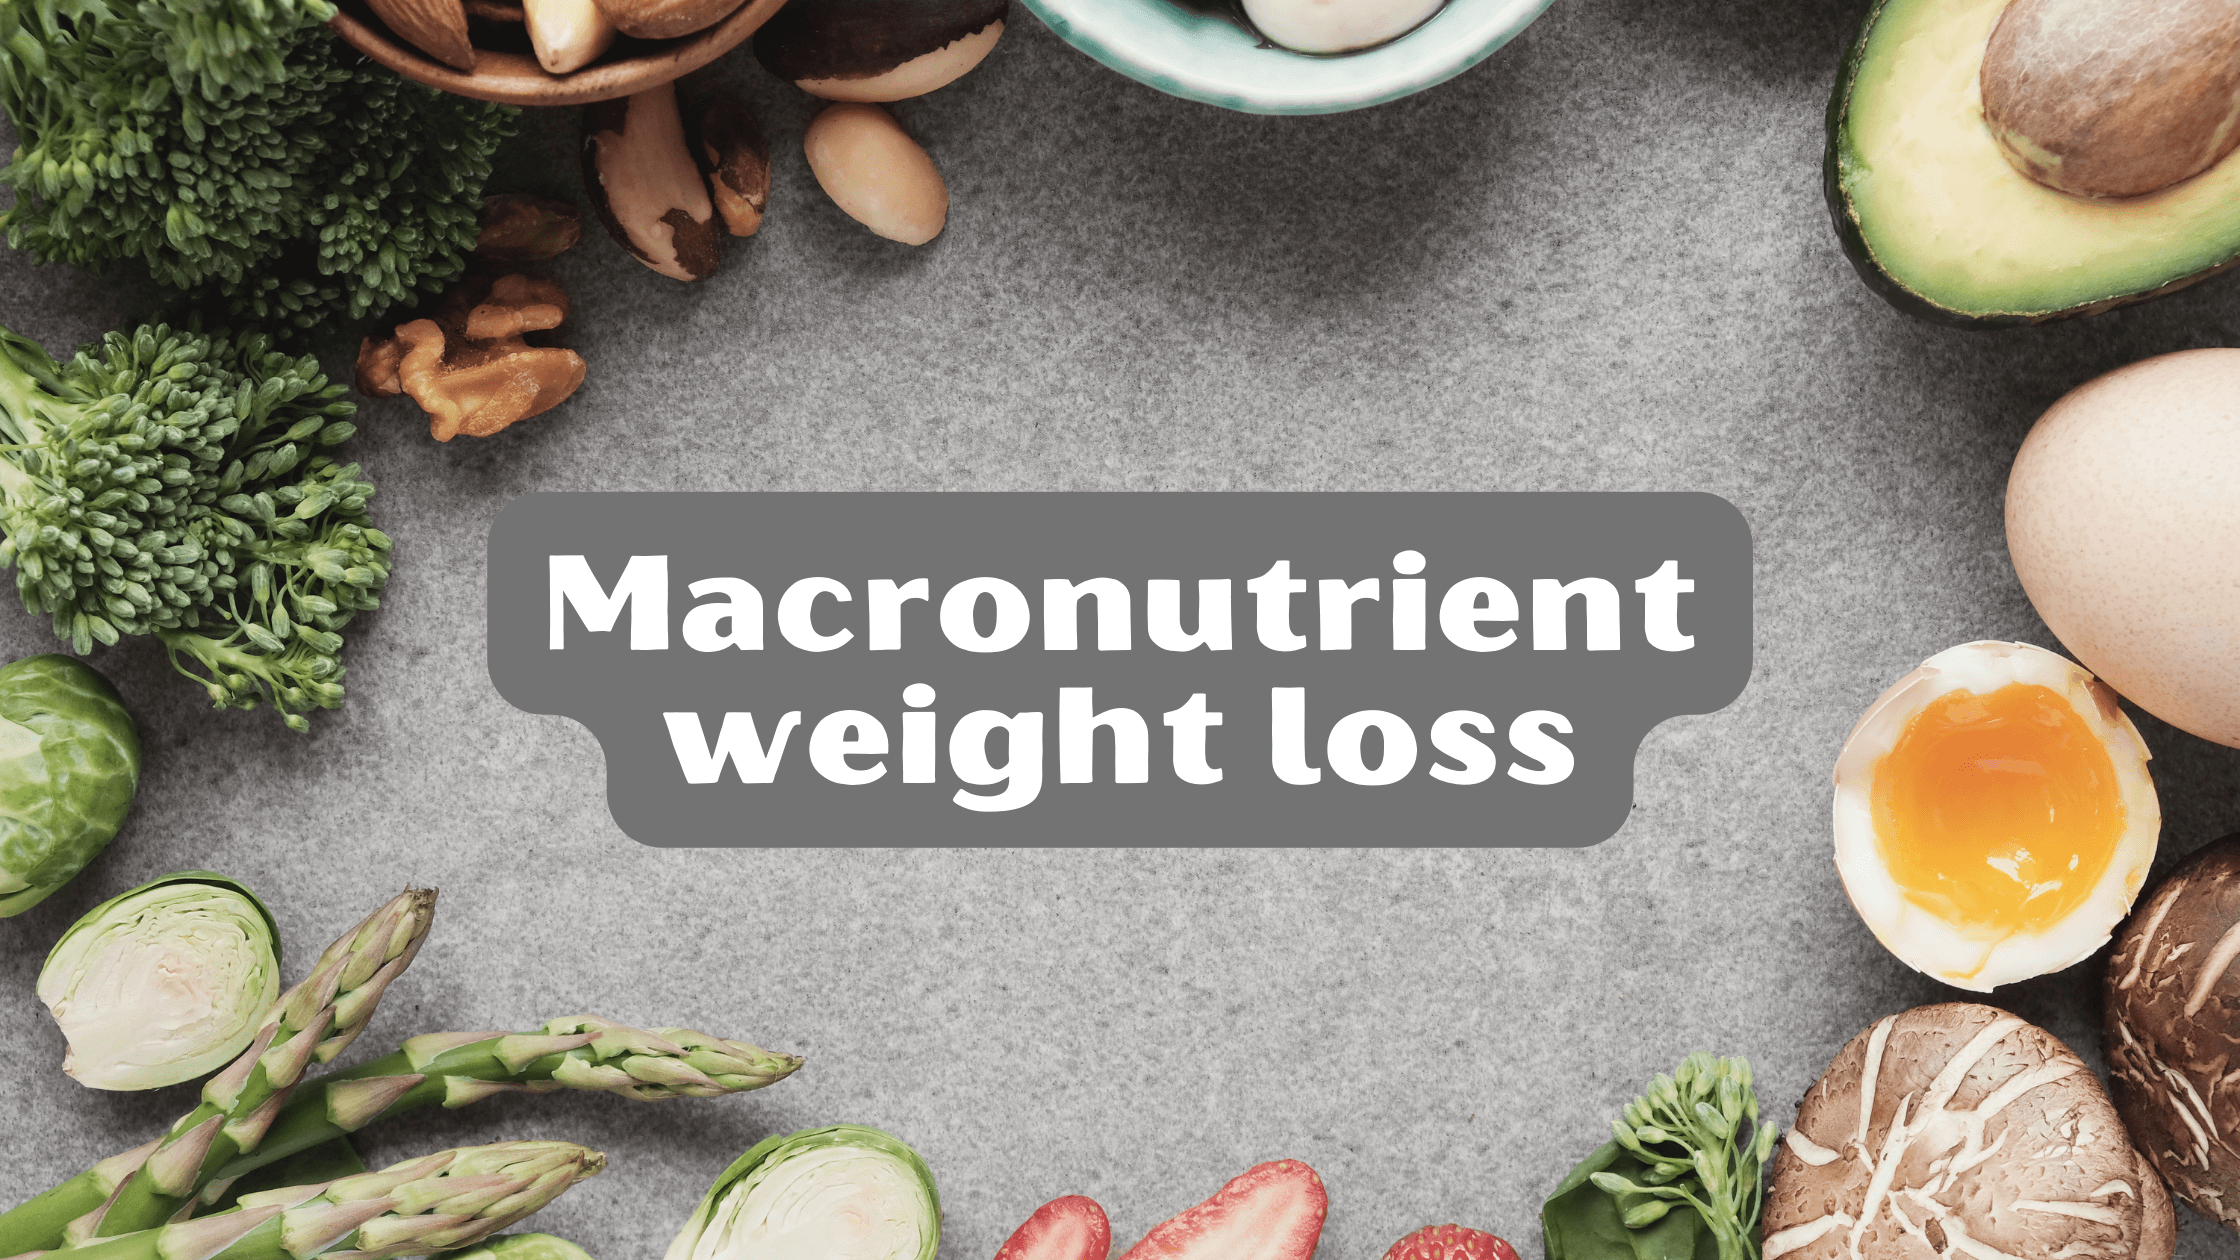 Macronutrient weight loss